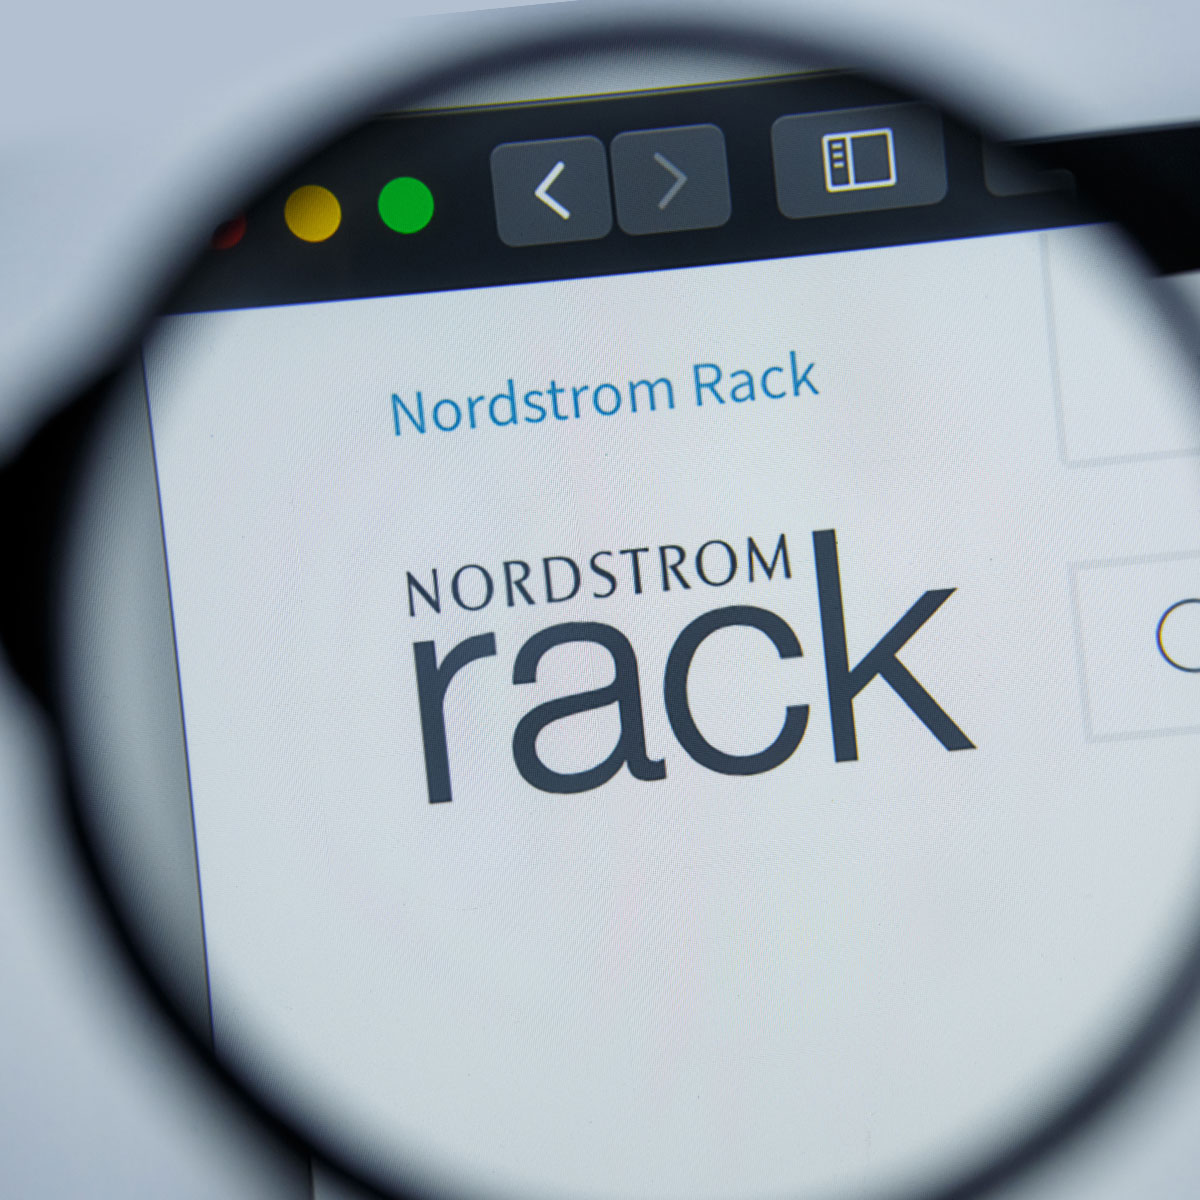 Nordstrom Rack is having a massive end-of-season sale